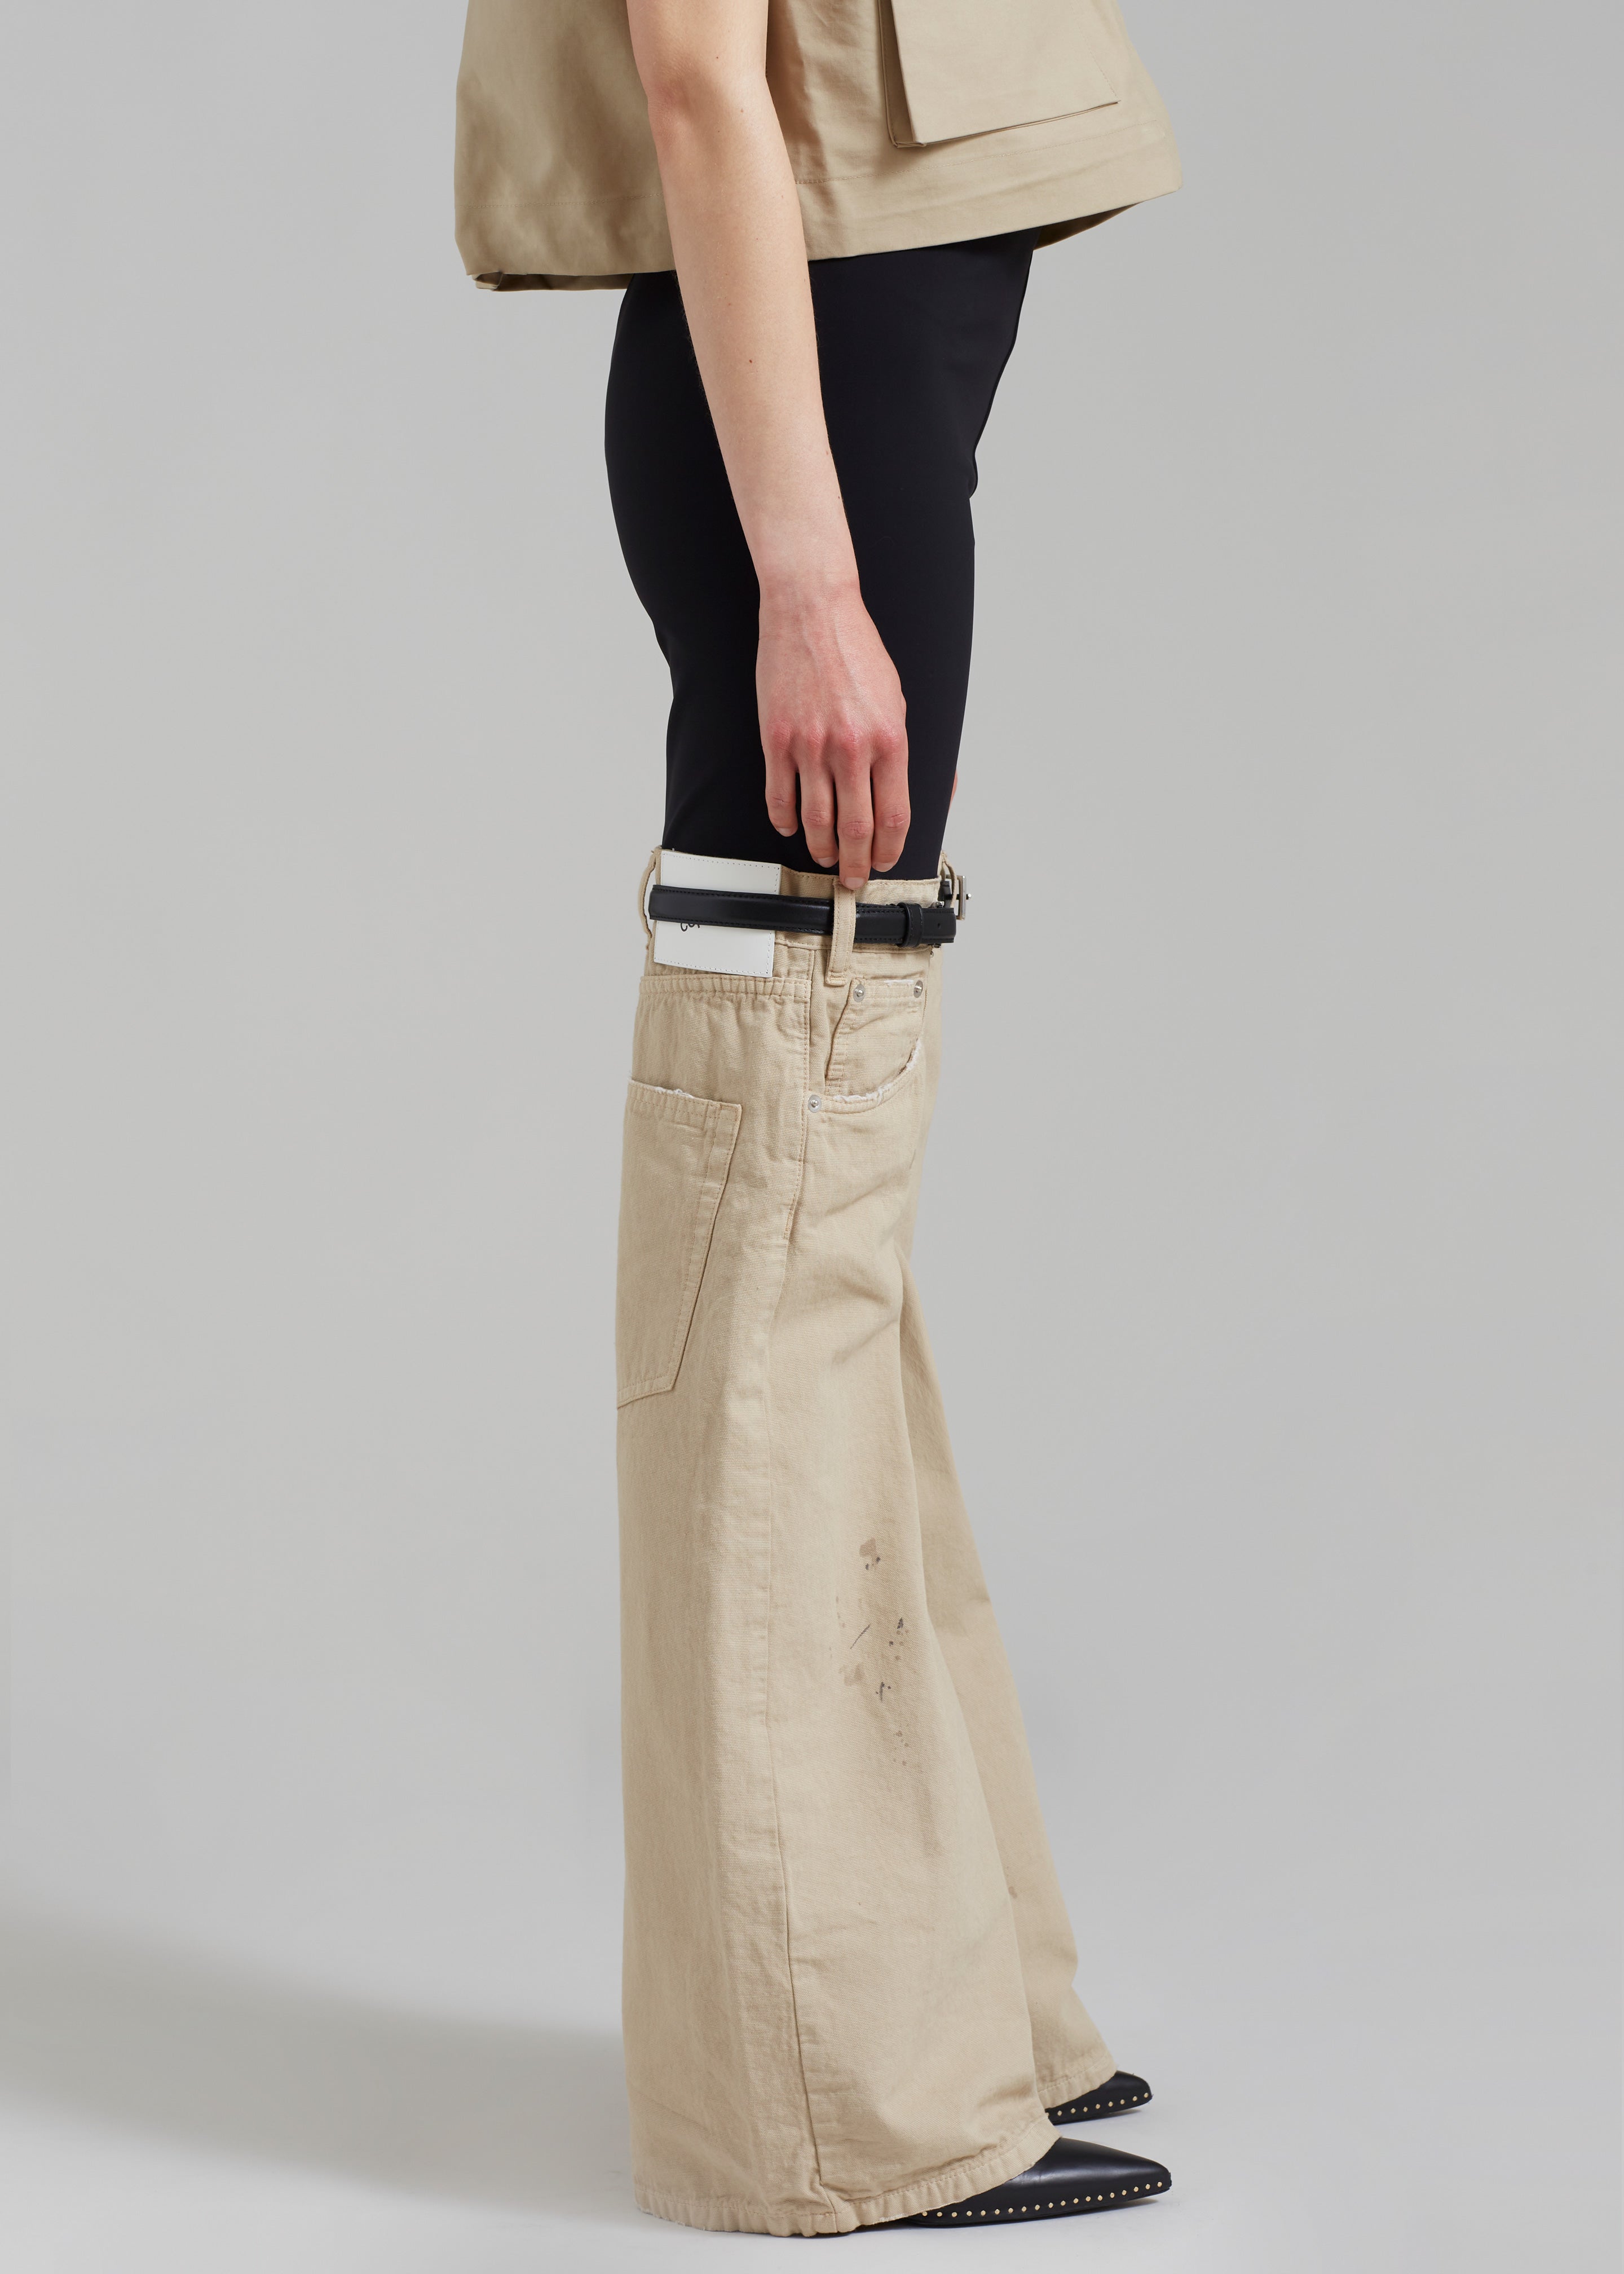 Coperni Hybrid Denim Trousers - Black/Beige - 3